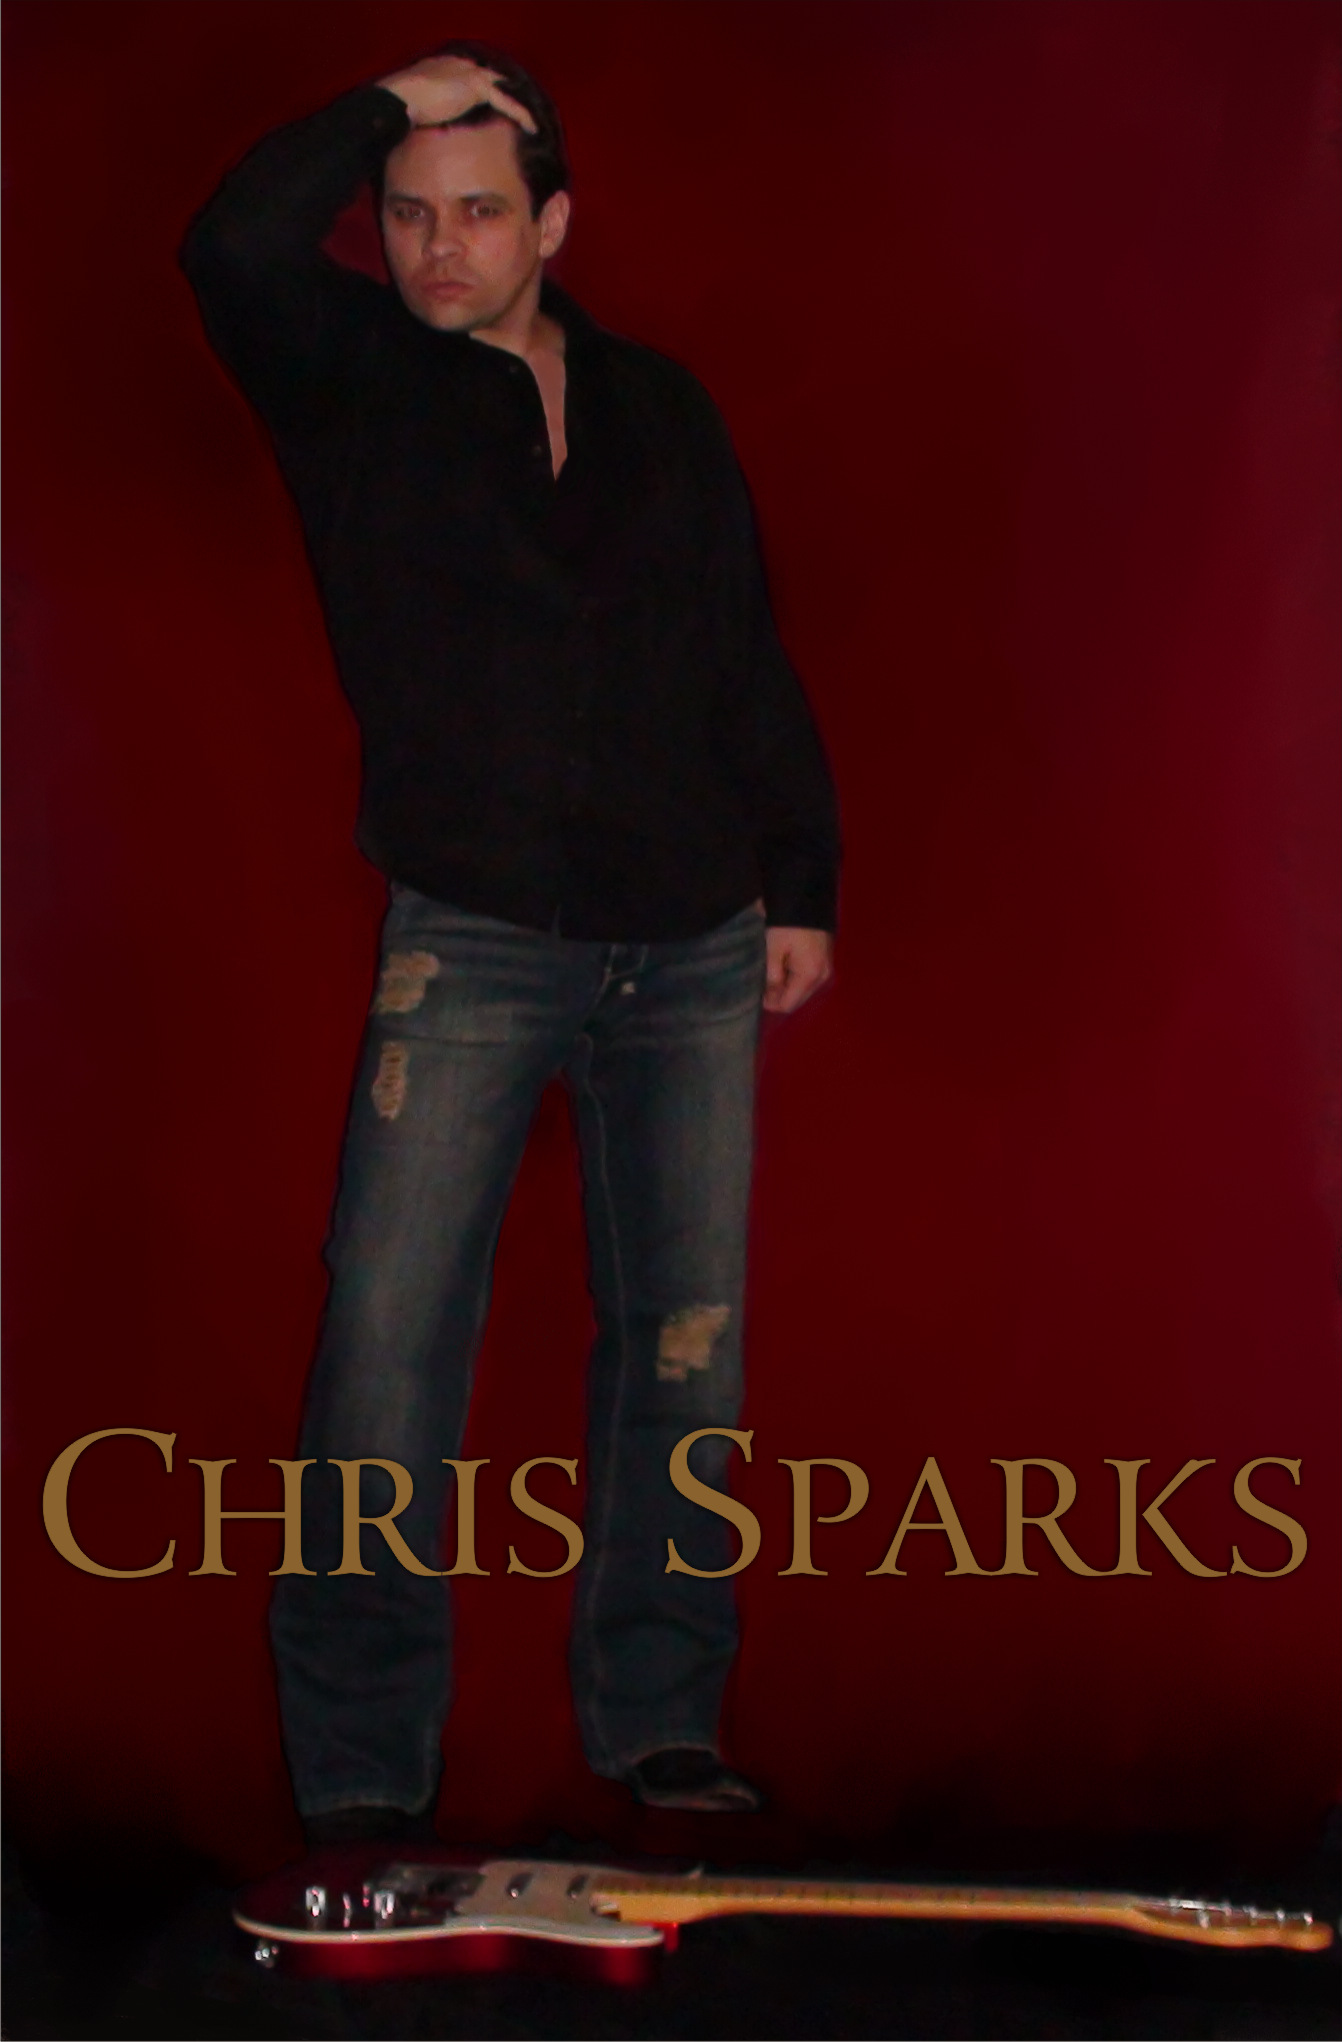 Chris Sparks Music Video Test Shot.